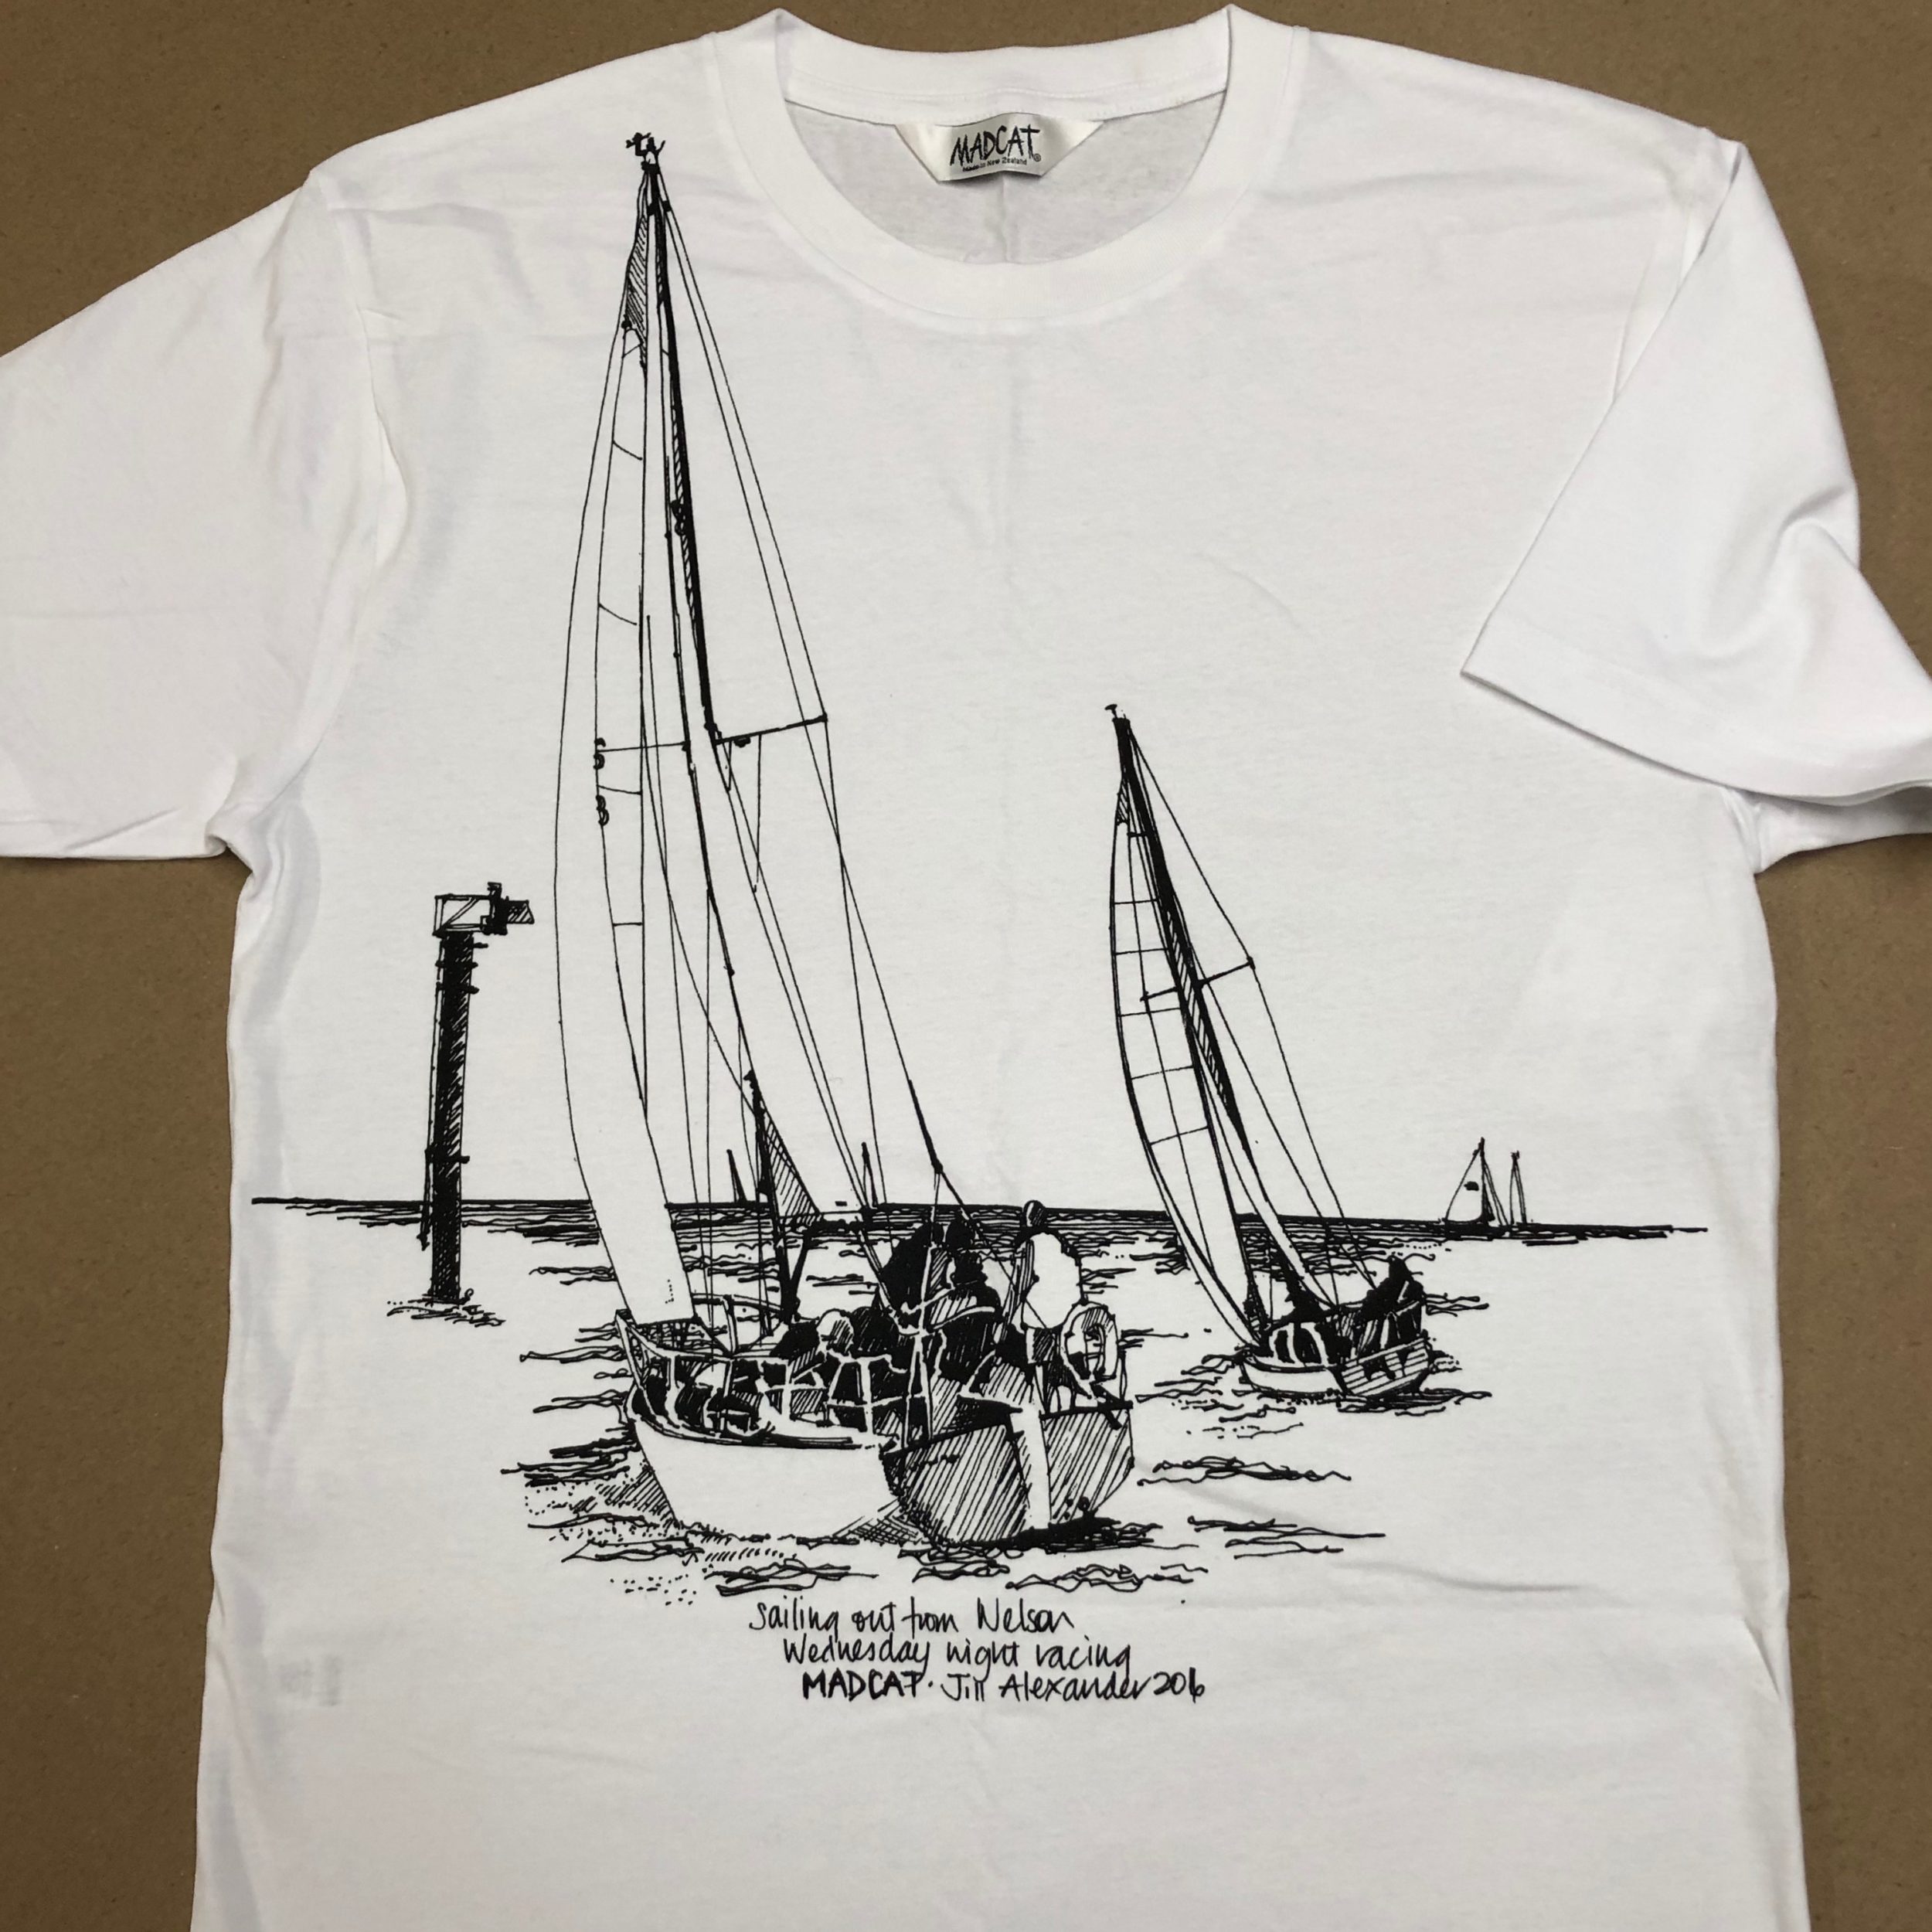 Sailing boat T shirt in white, size medium.